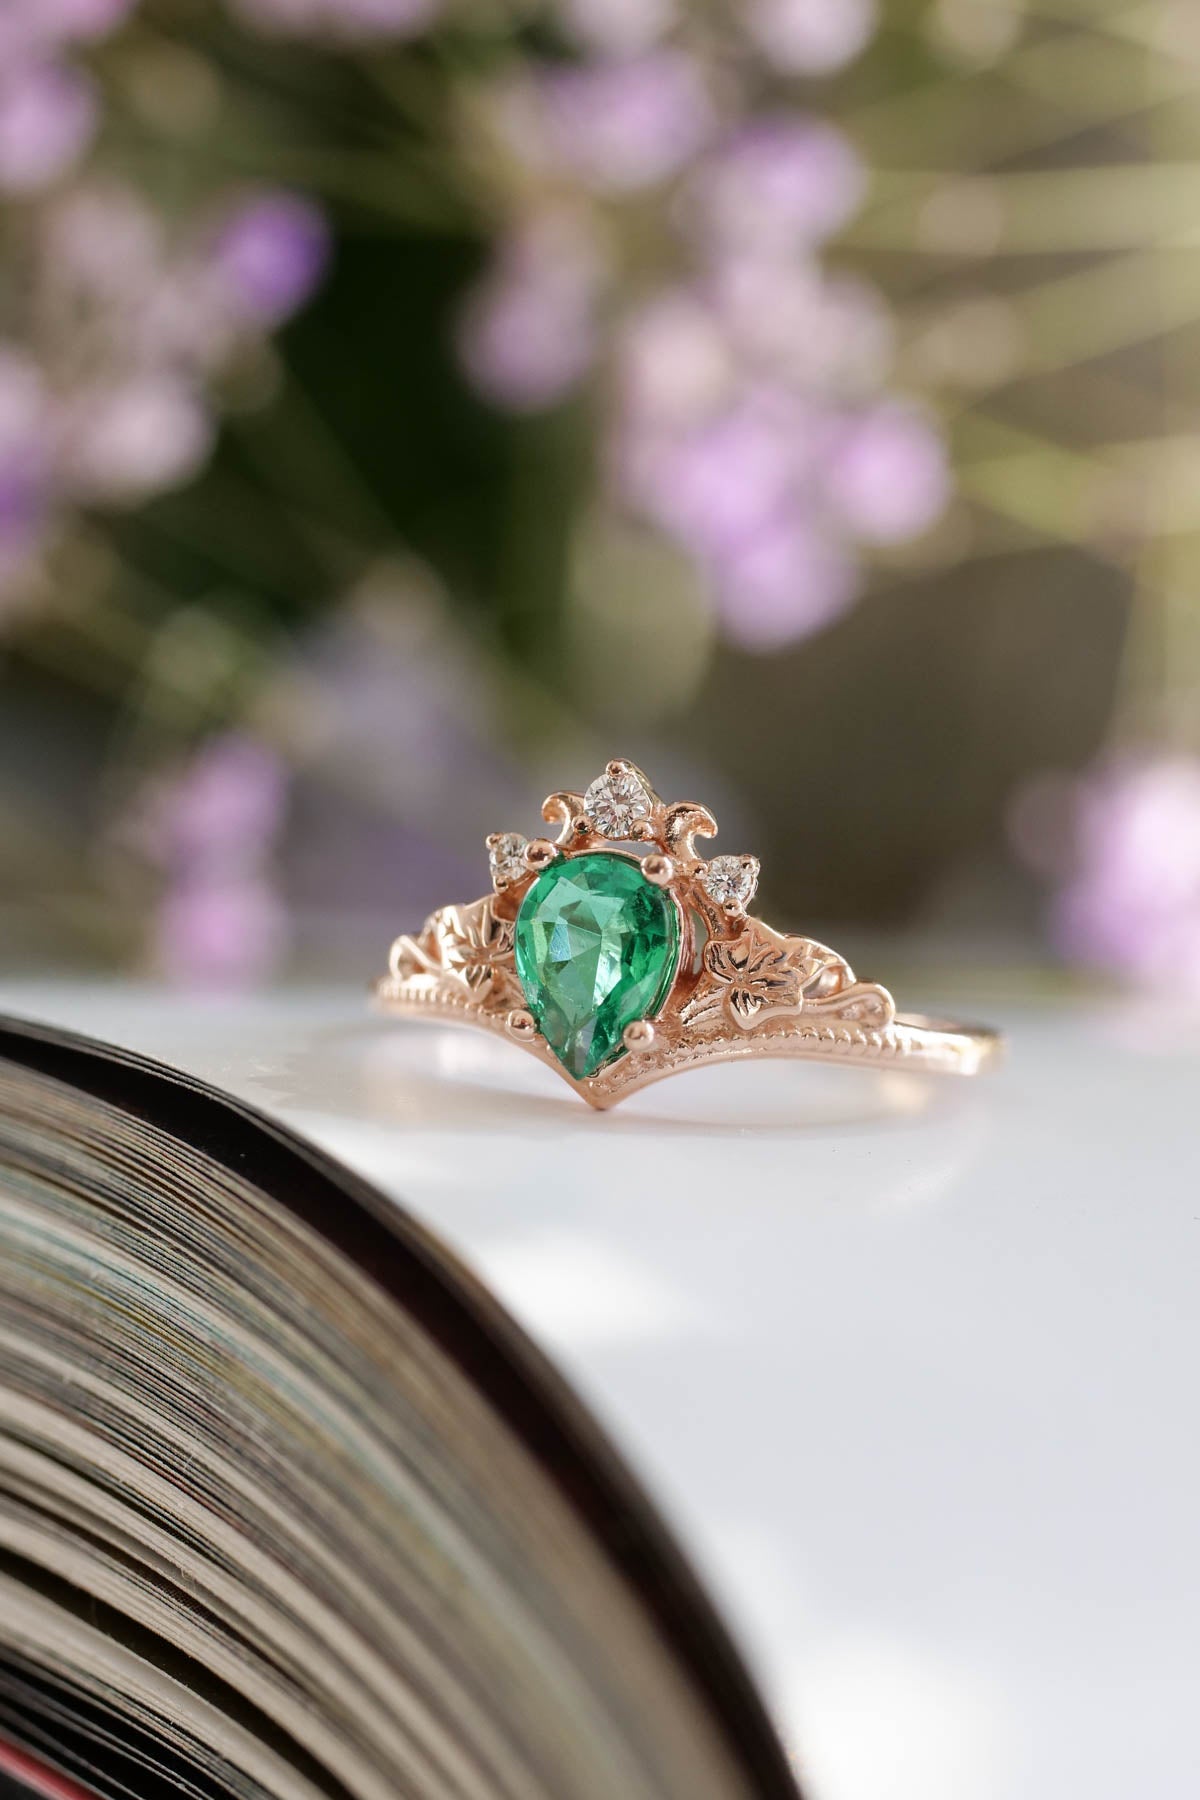 10 colorful gemstone engagement rings we love - Reviewed